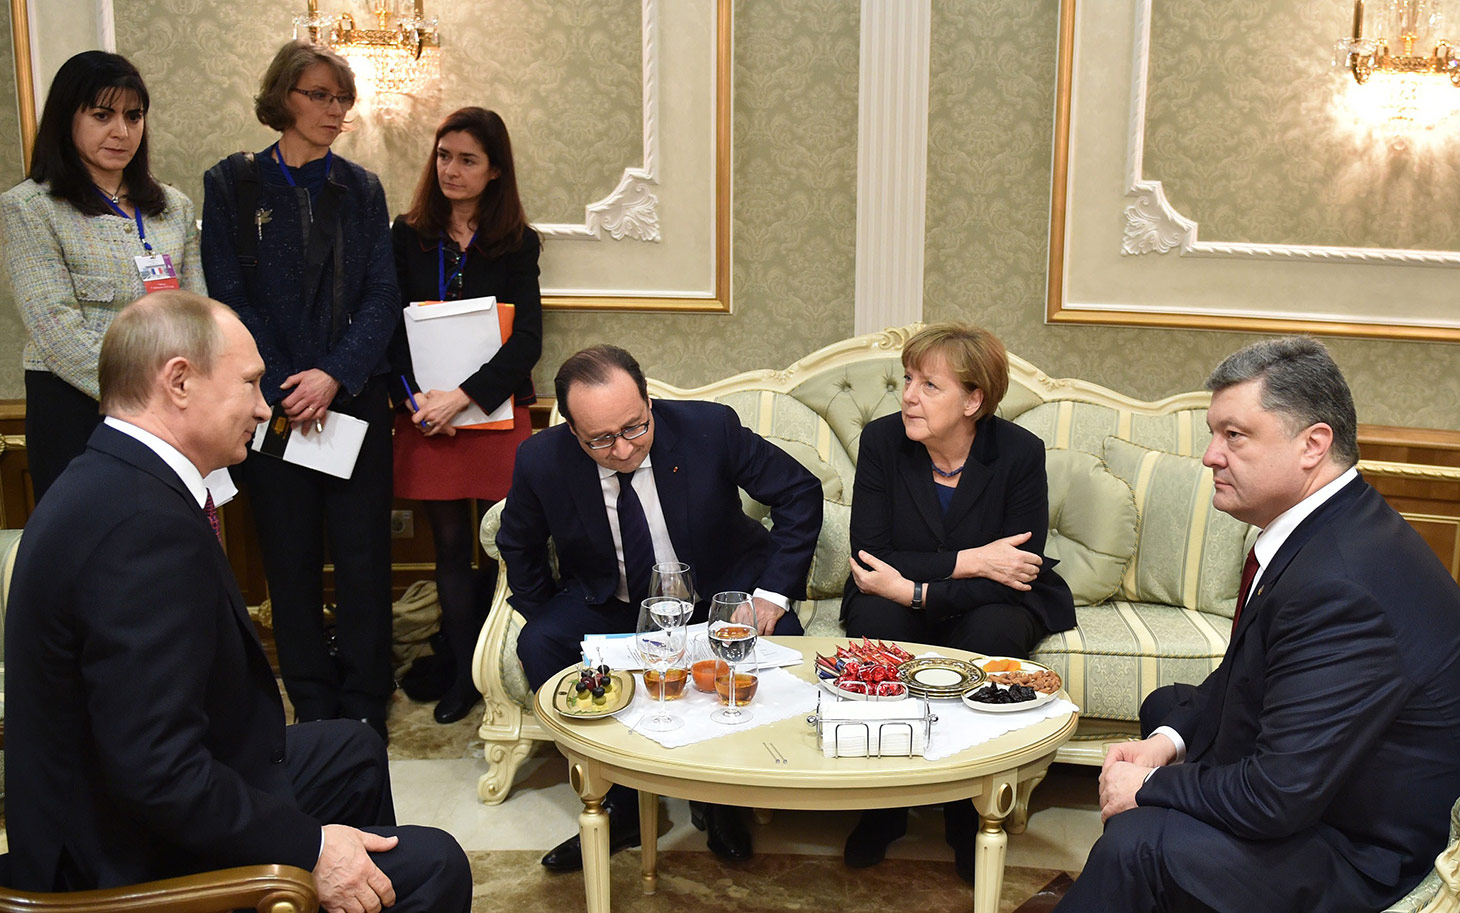 Talks between Vladimir Putin, Francois Hollande, Angela Merkel and Petro Poroshenko have last through the night [photo credit: AFP/ Getty Images]